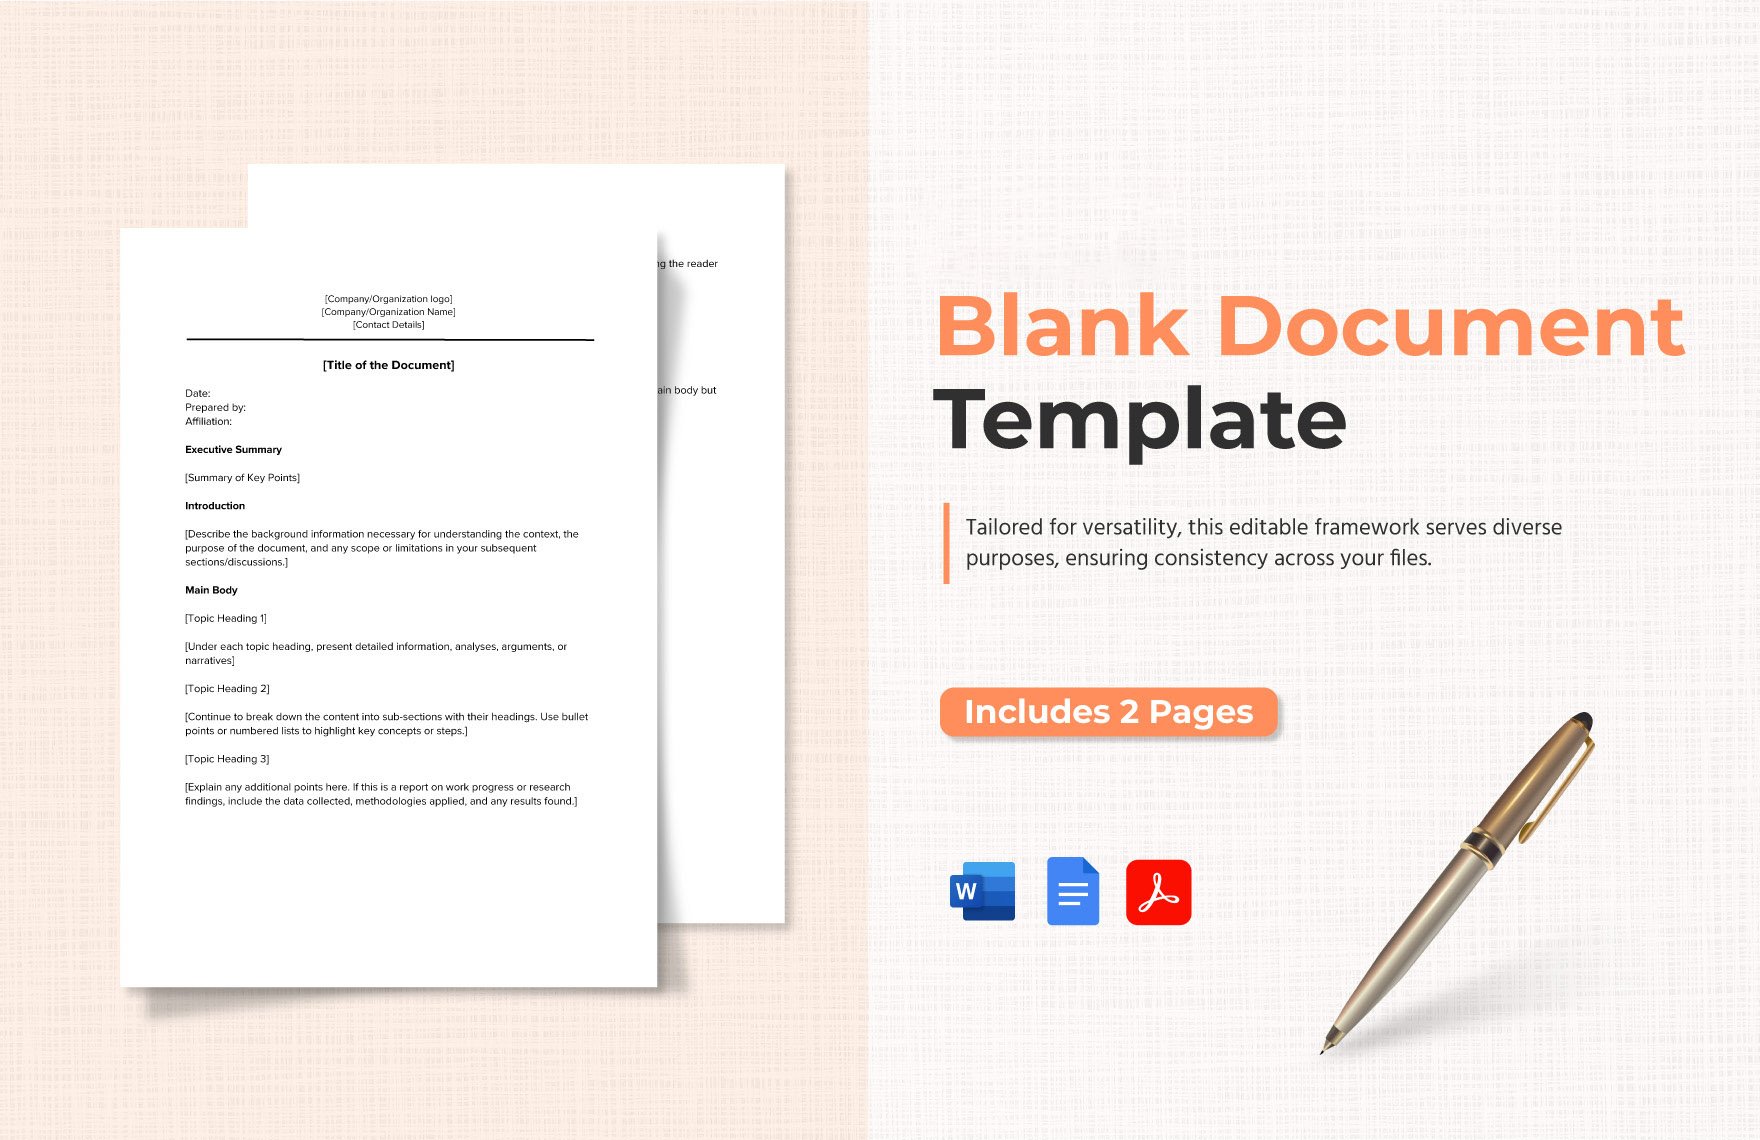 Blank Document Template